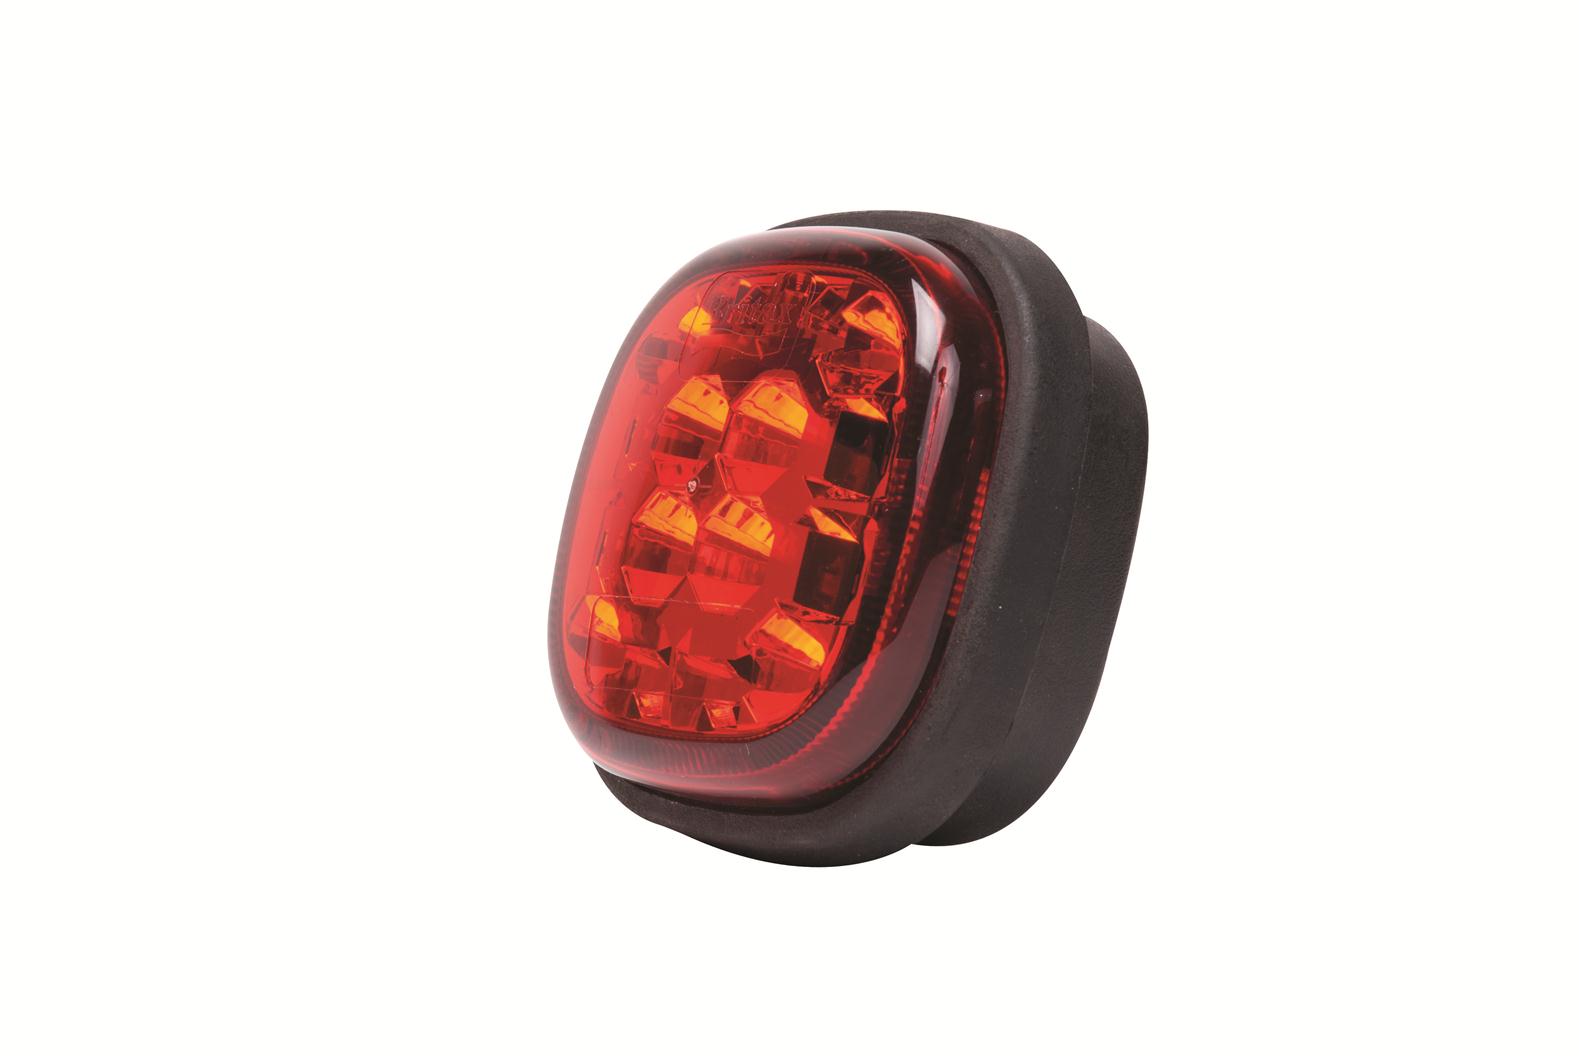 Britax L11 LED rear lamps